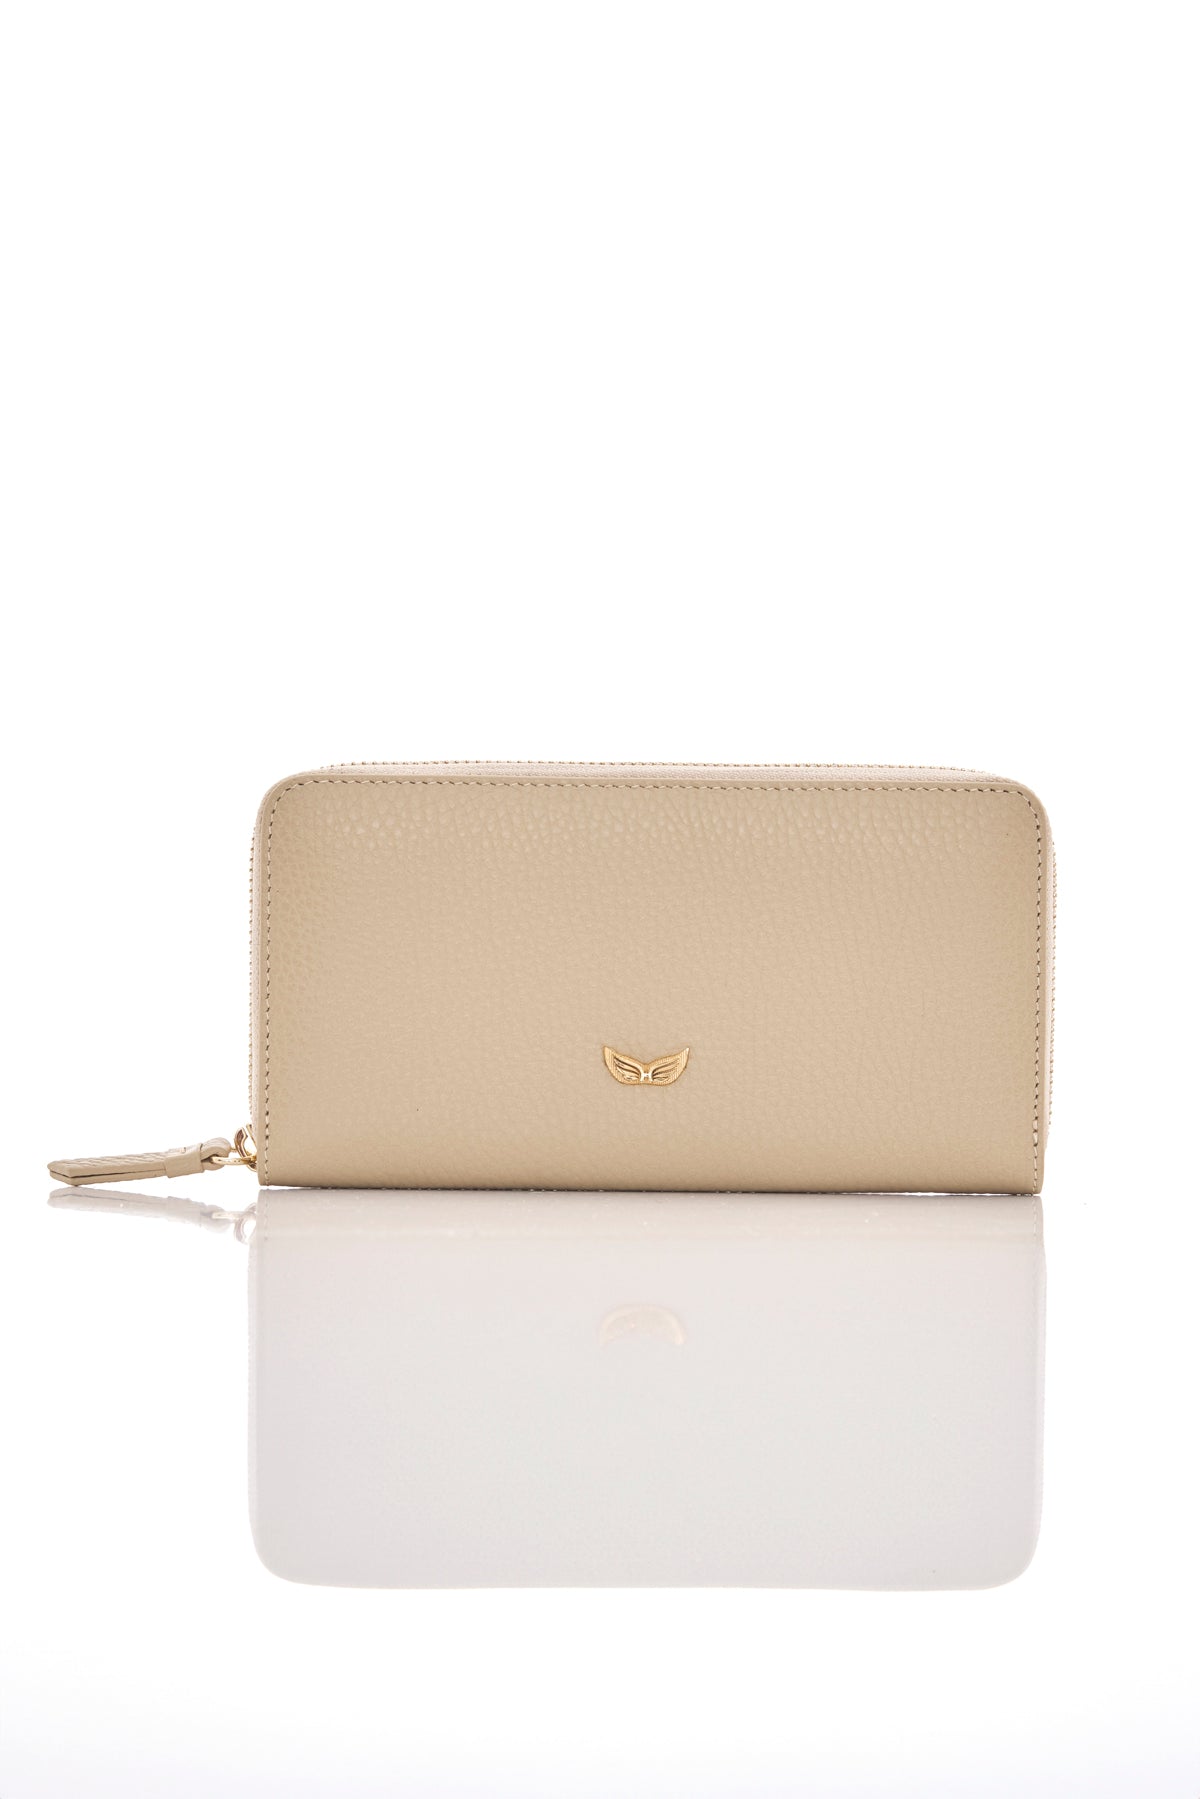 beige sand ouroboros genuine leather women's wallet back